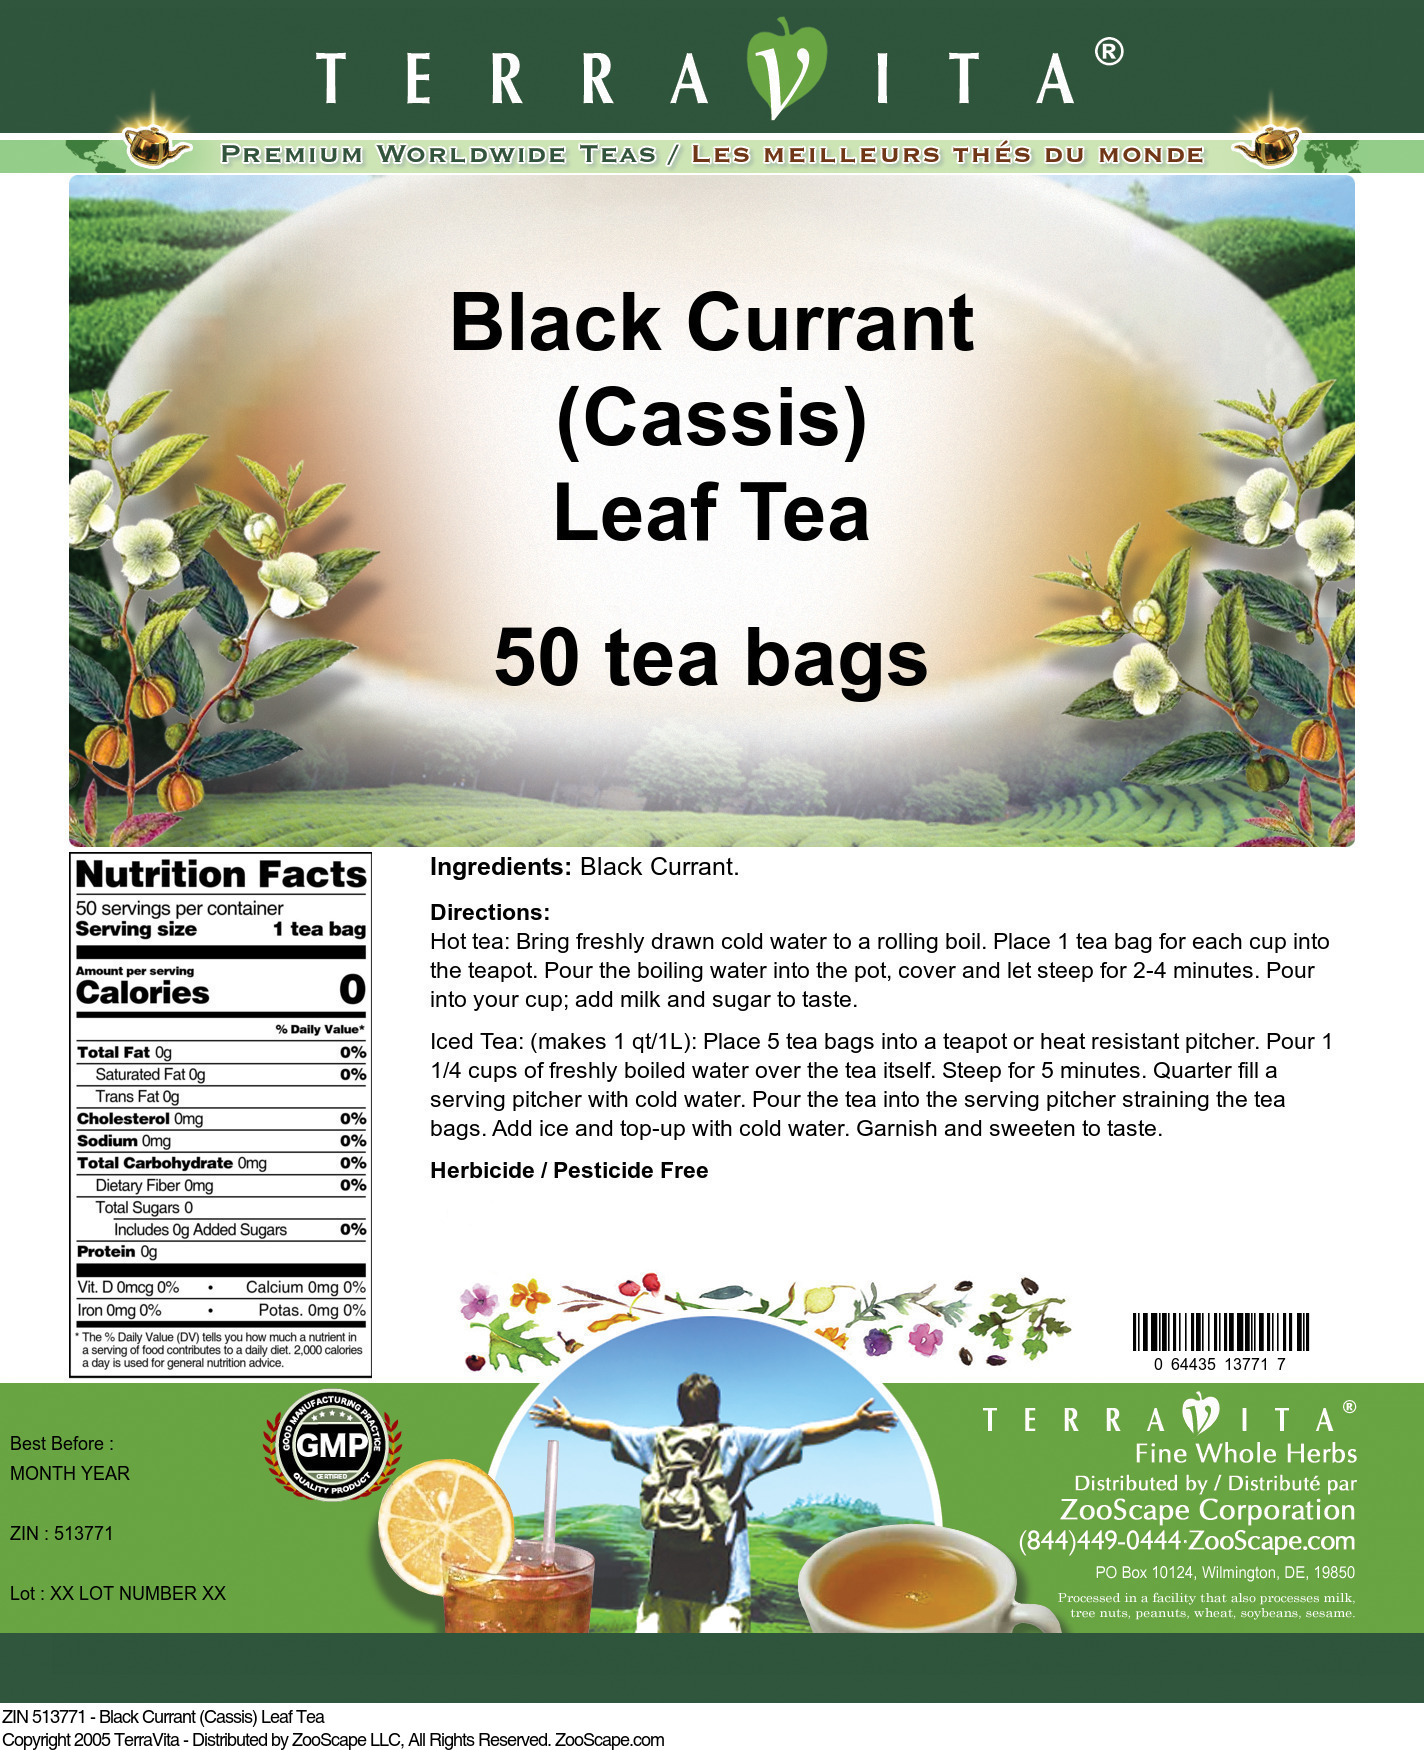 Black Currant (Cassis) Leaf Tea - Label